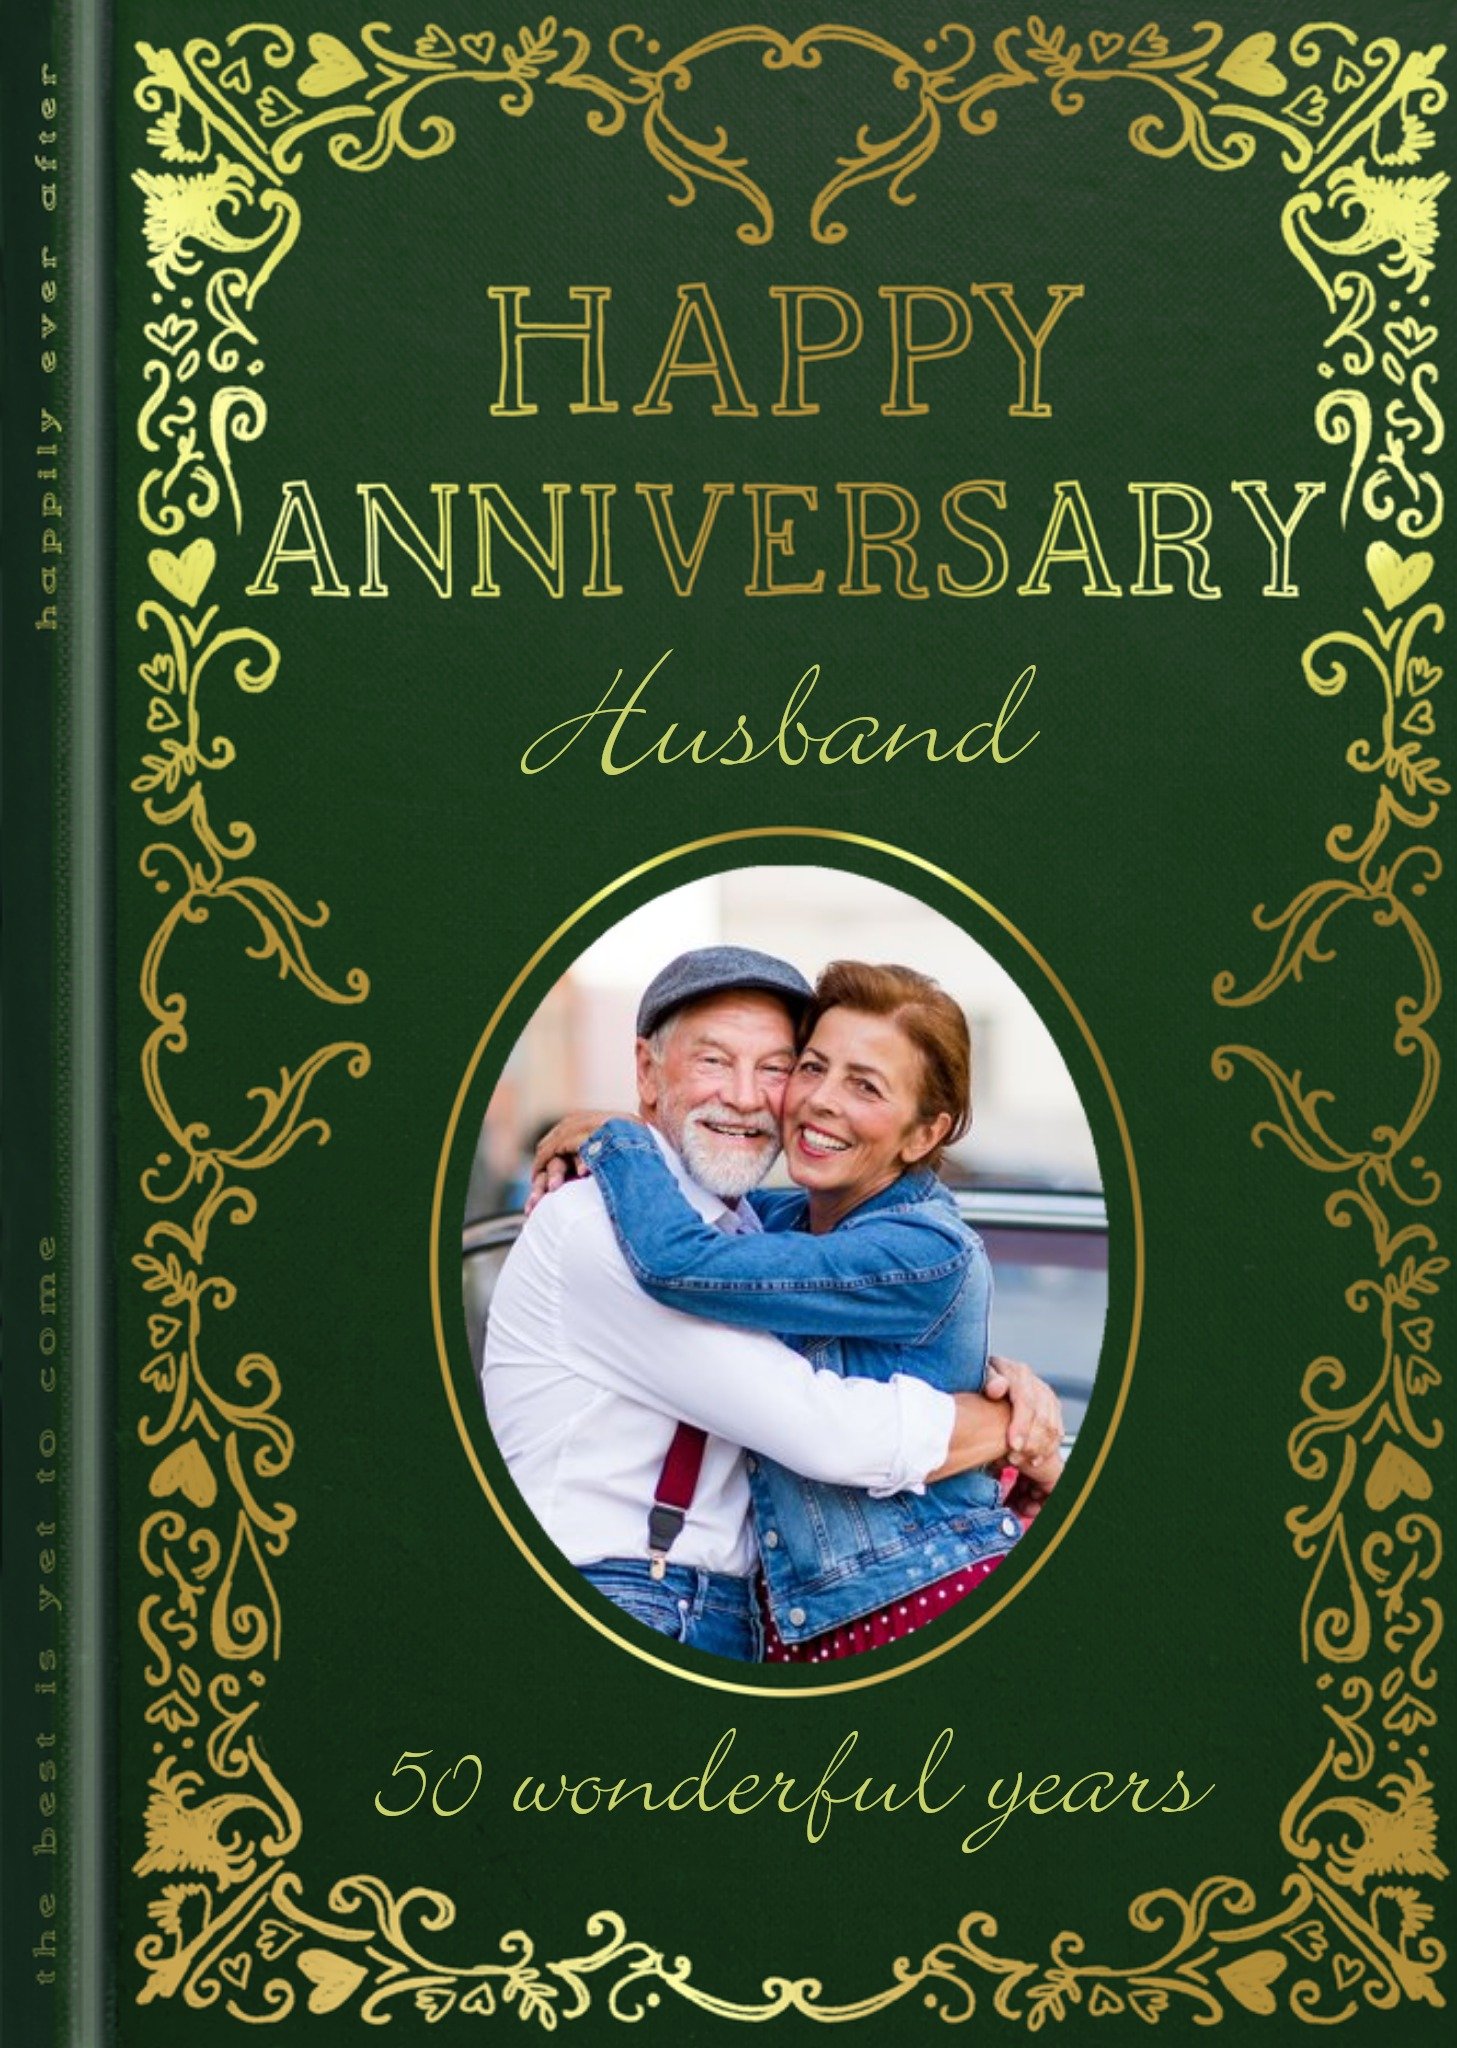 Okey Dokey Design Happy Anniversary Husband 50 Wonderful Years Photo Upload Card, Large